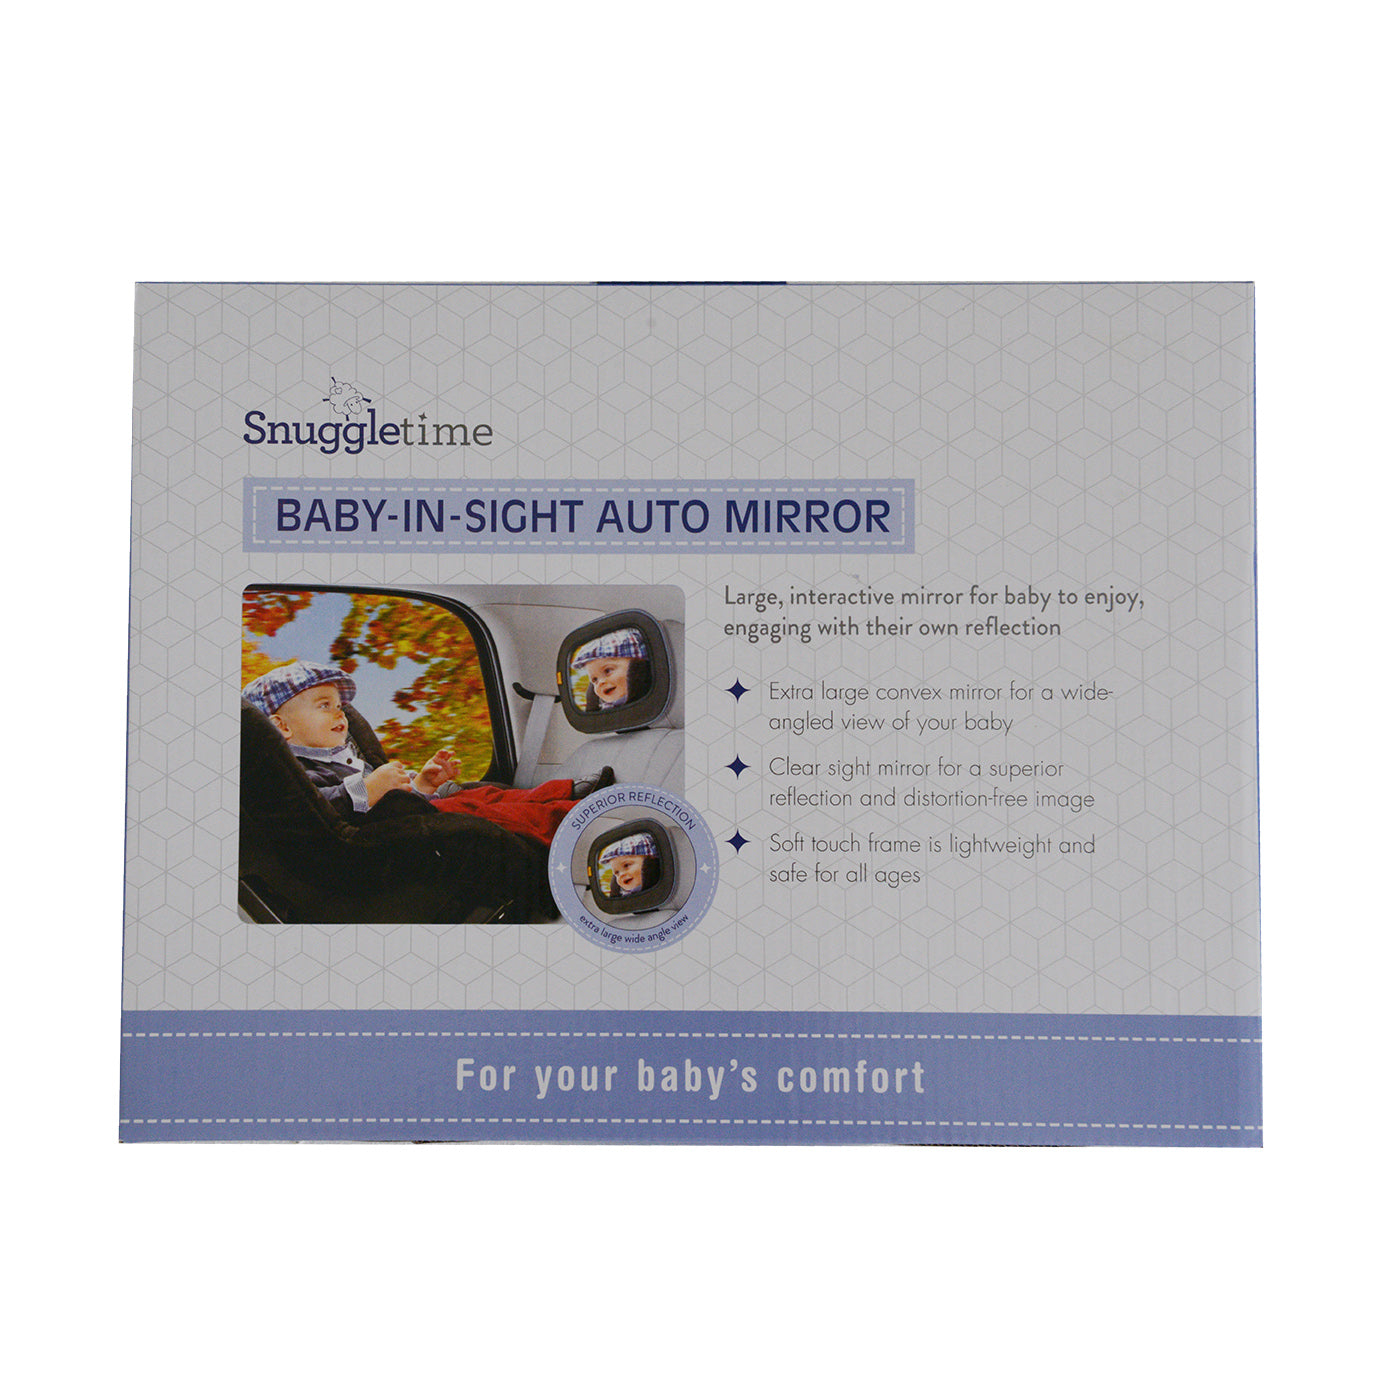 Snuggletime Baby-in-Sight Auto Mirror